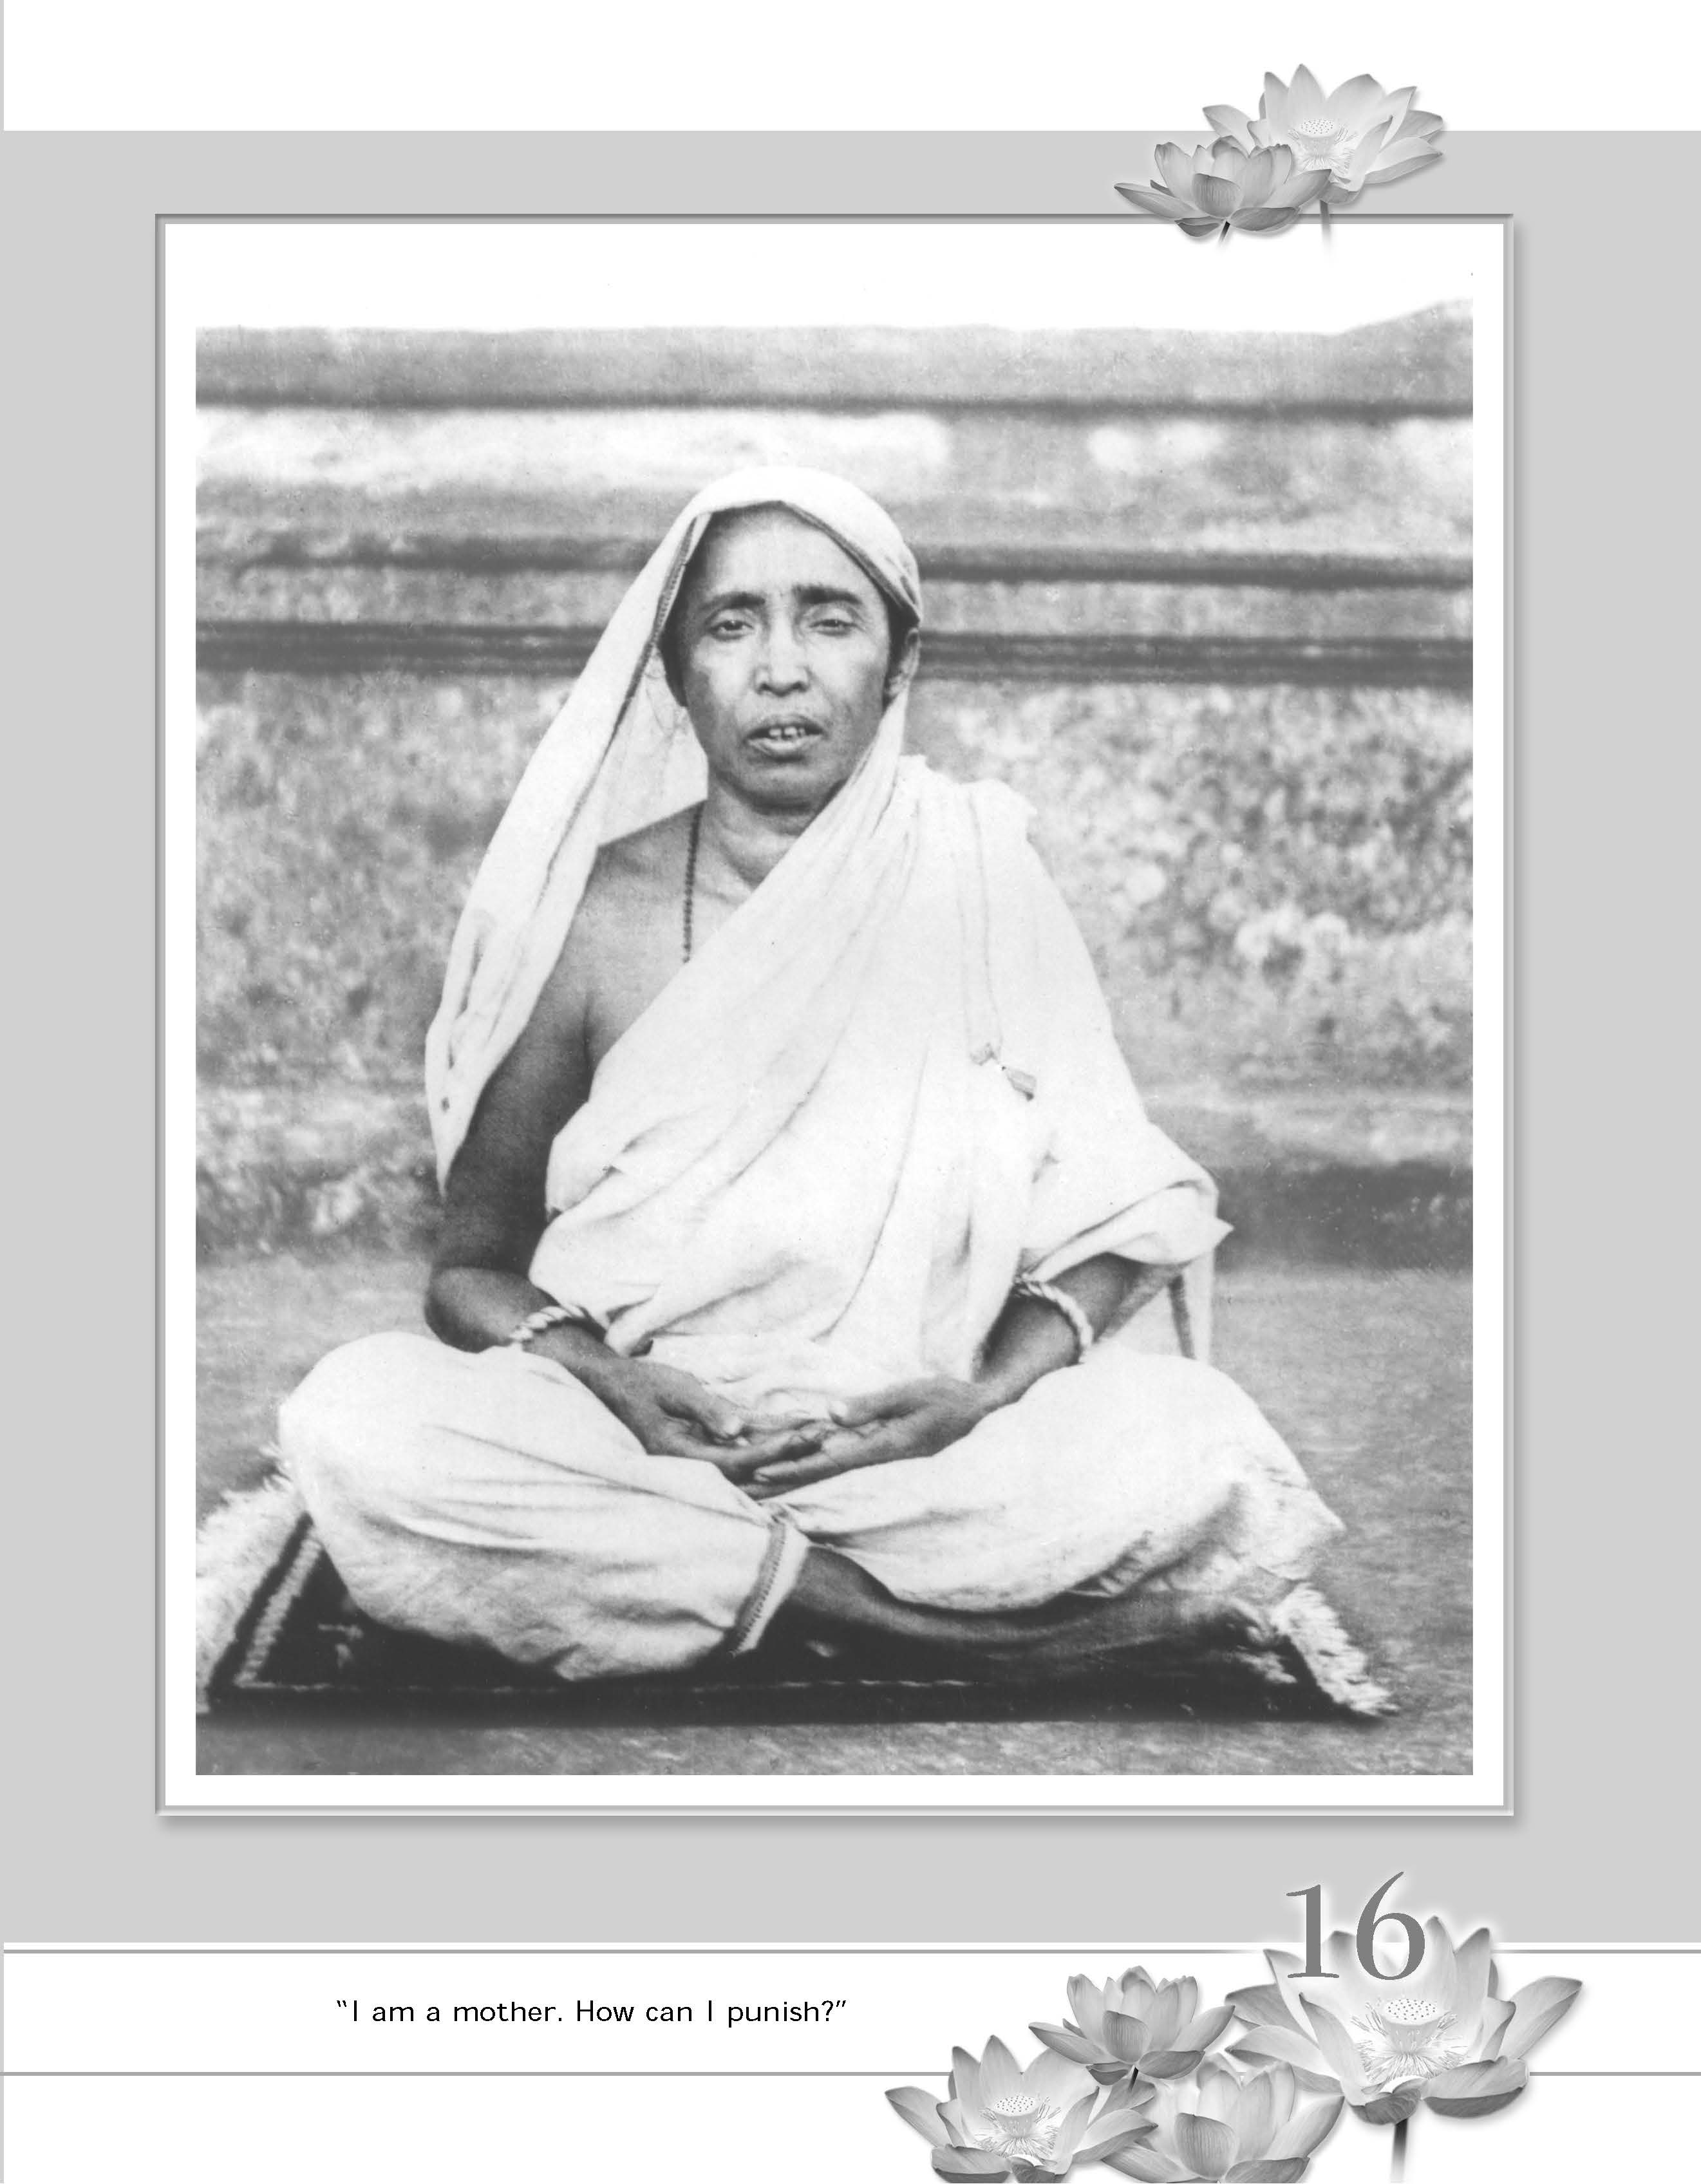 Photographs of Sri Ramakrishna - Sarada Devi